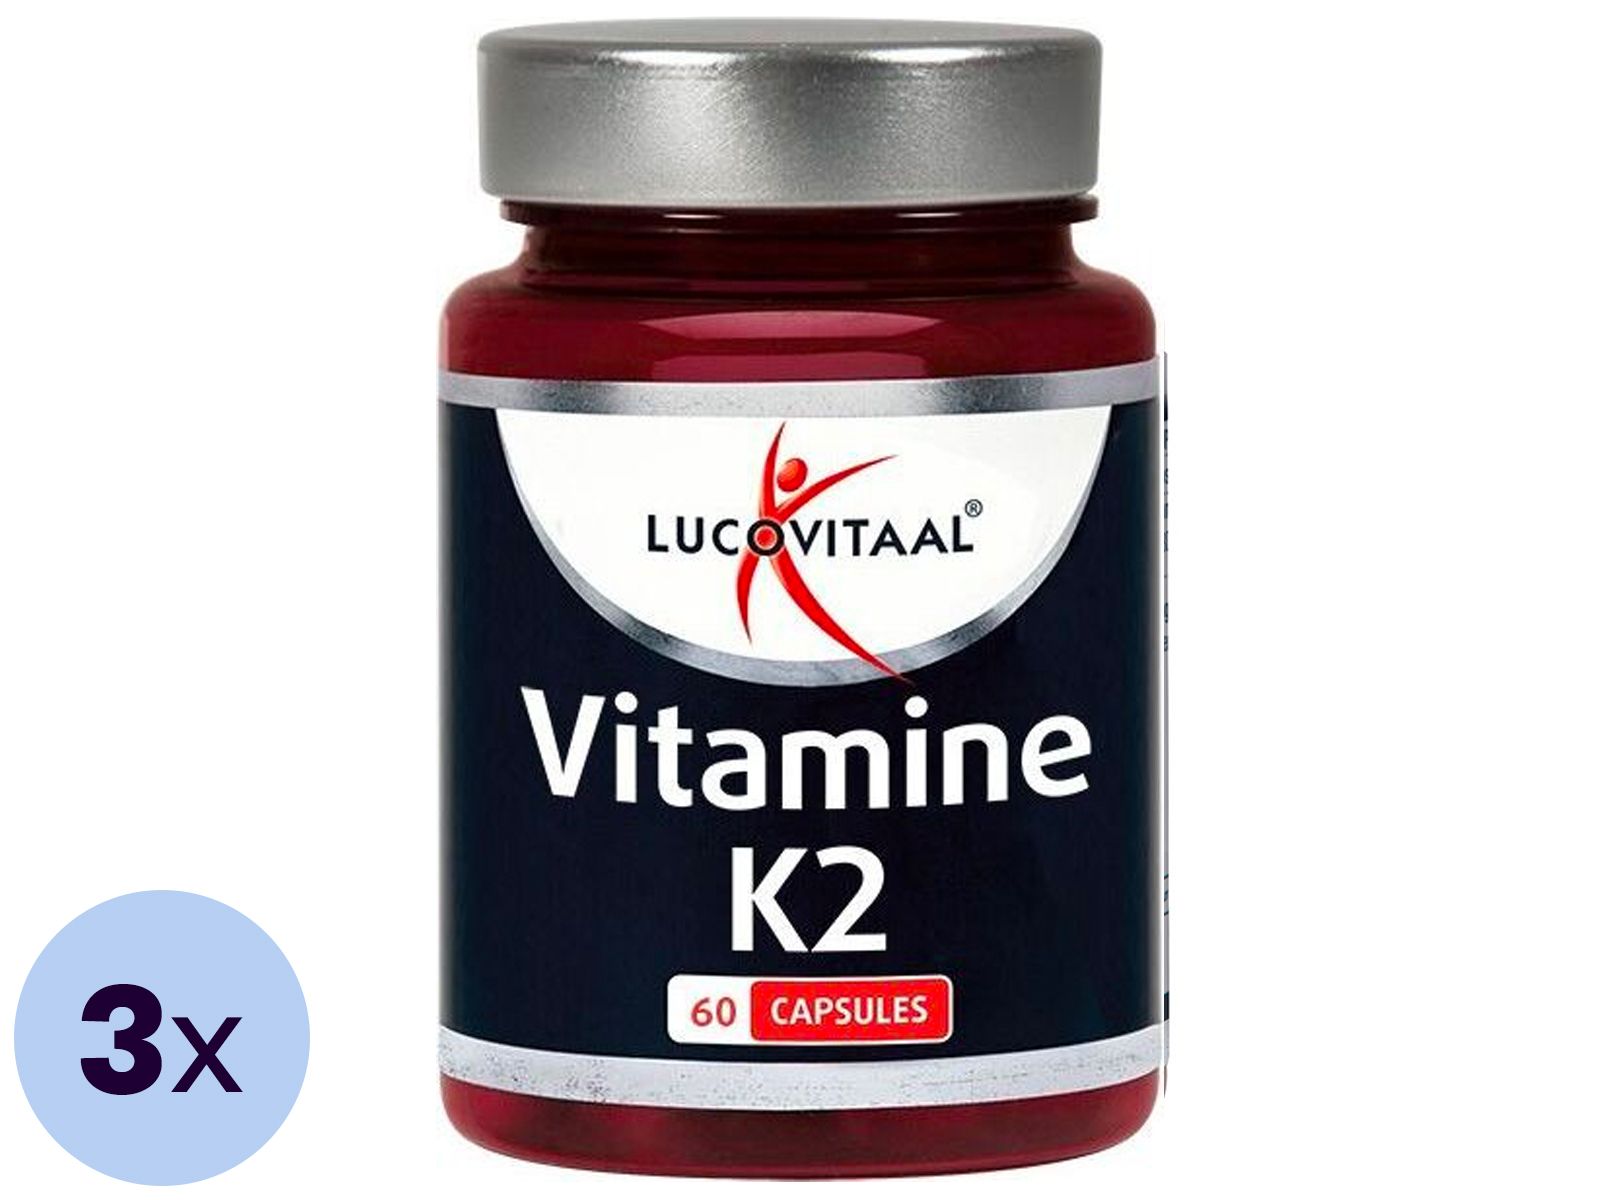 3x-60-capsules-lucovitaal-vitamine-k2-75-mcg